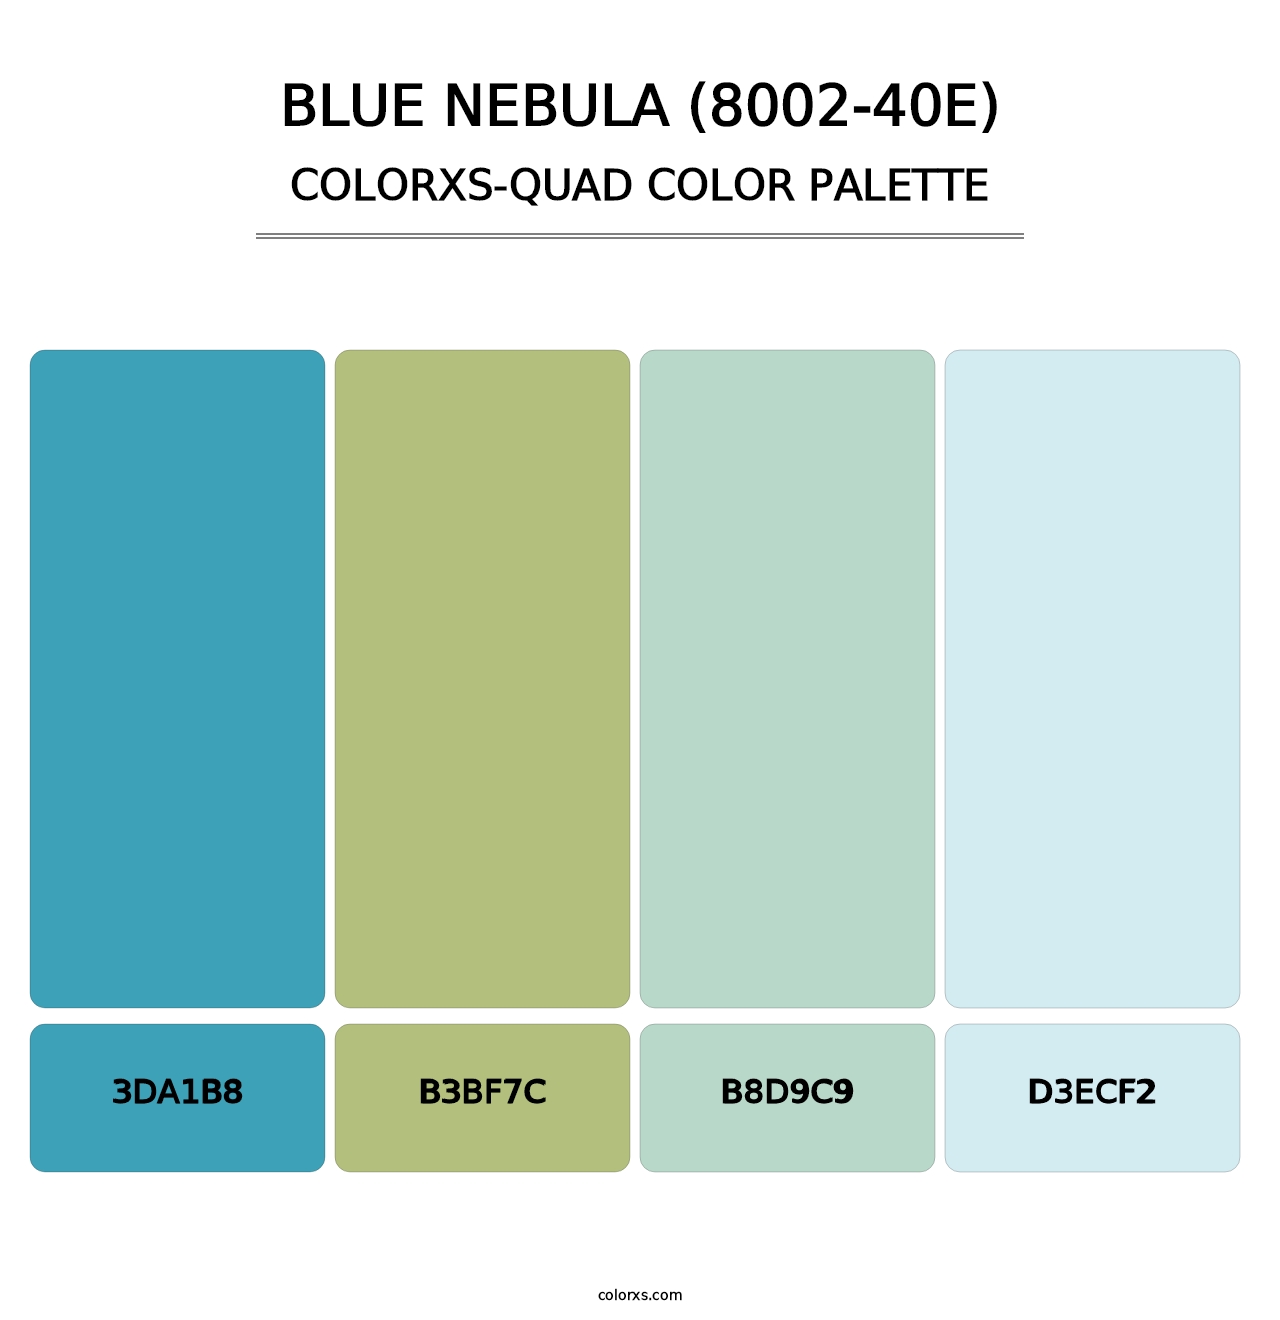 Blue Nebula (8002-40E) - Colorxs Quad Palette